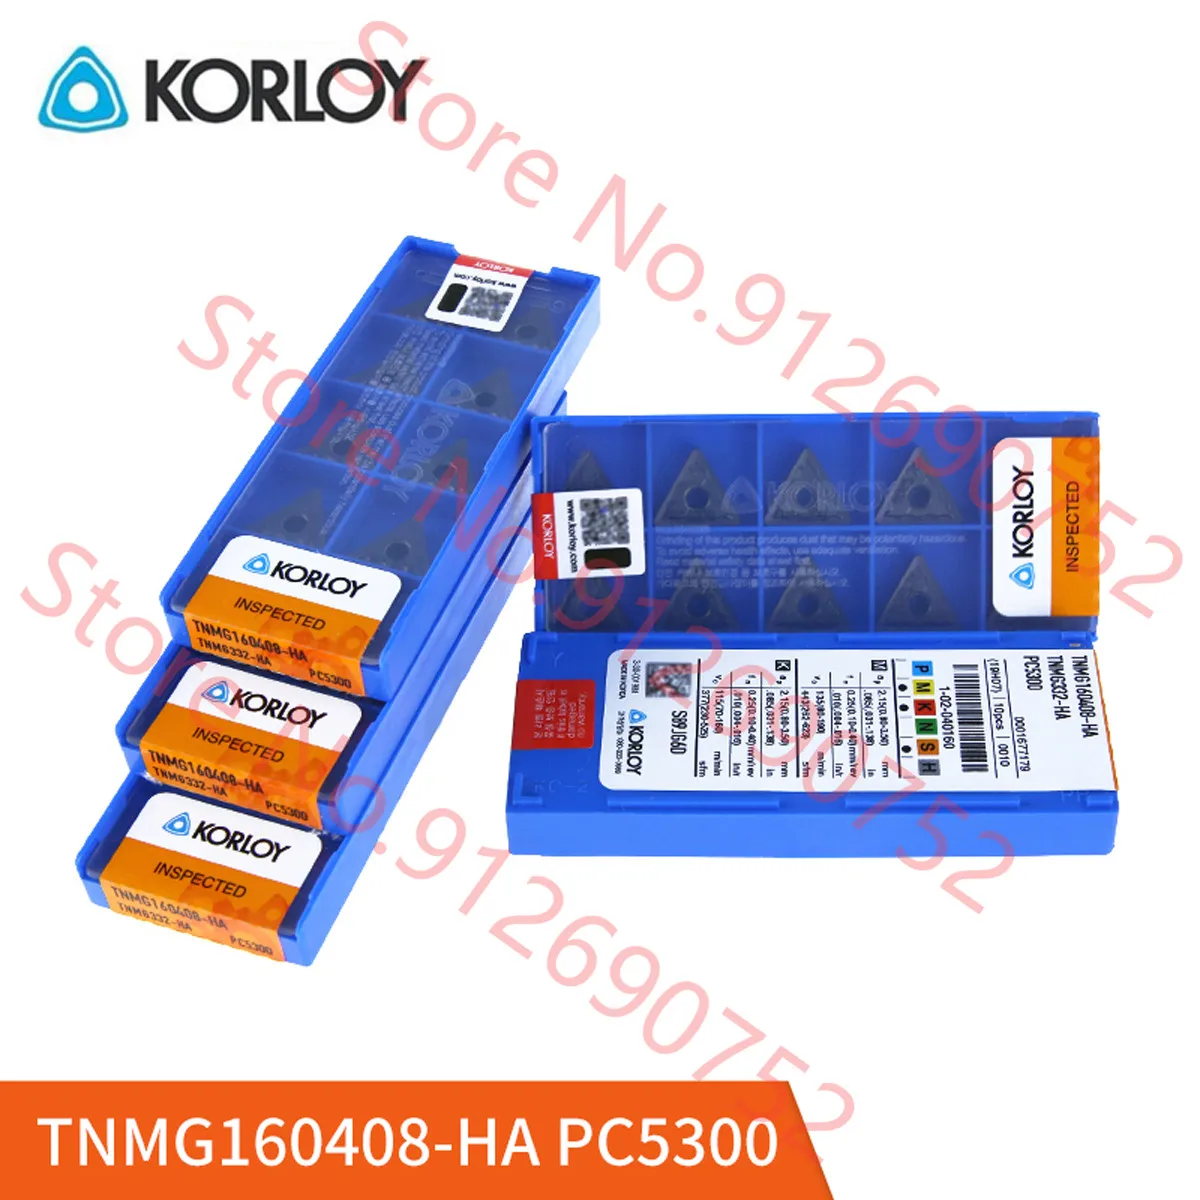 TNMG160404-HA/TNMG160408-HA H01 NC3120 PC9030 PC5300 KORLOY KARBIID SISESTA 10PCS/BOX 3